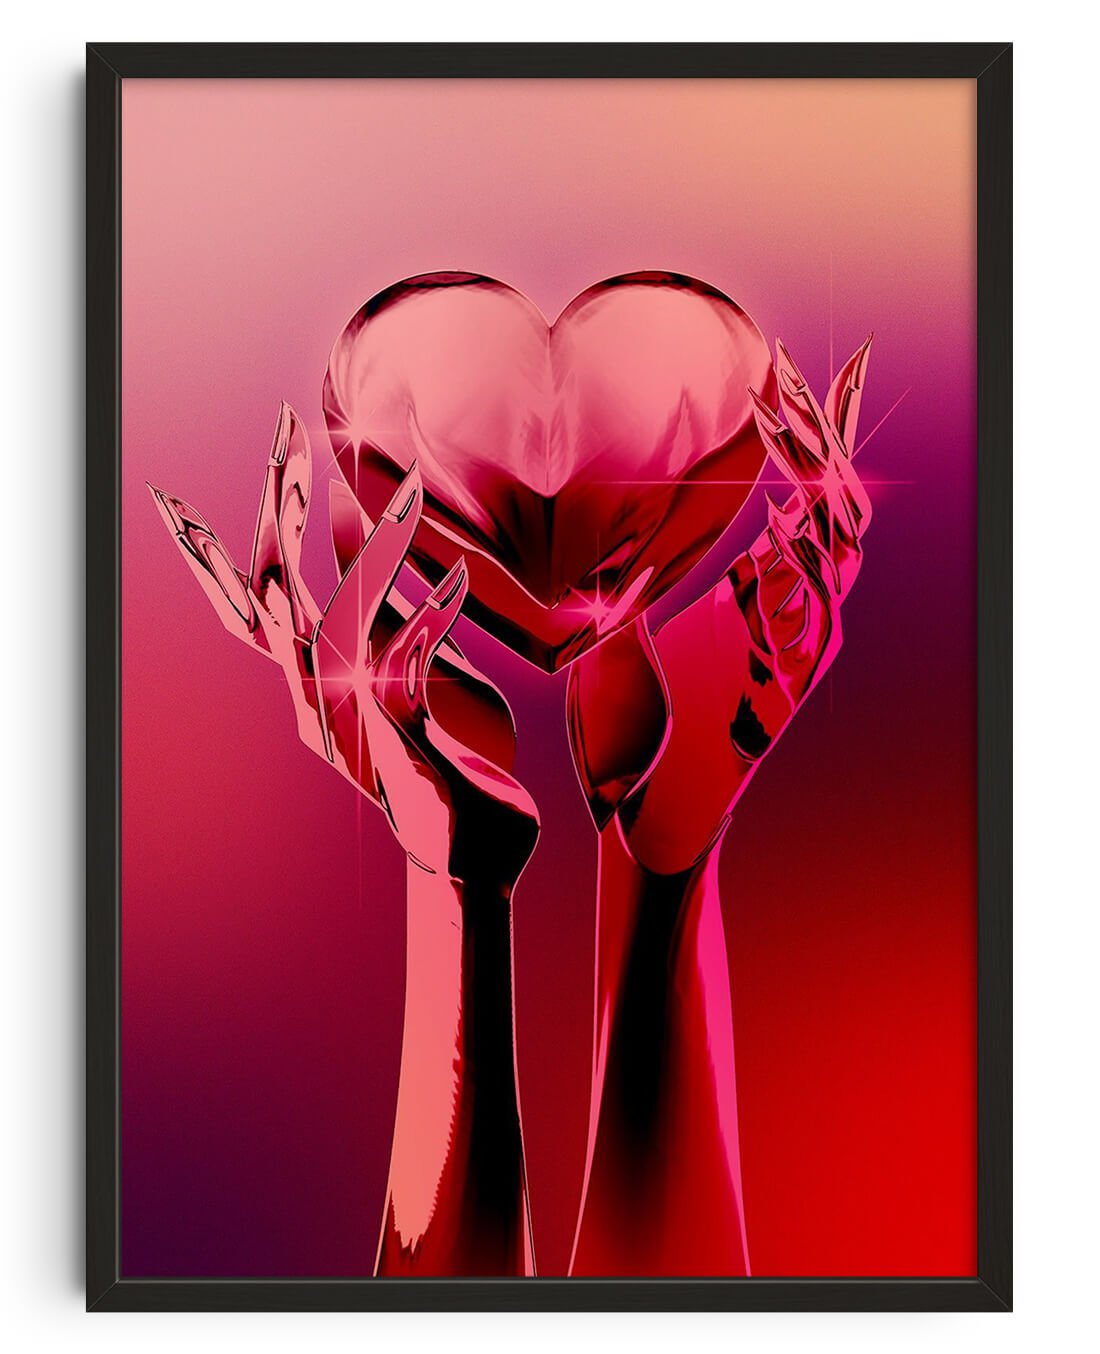 Chrome Heart by Paulina Almira contemporary wall art print from DROOL